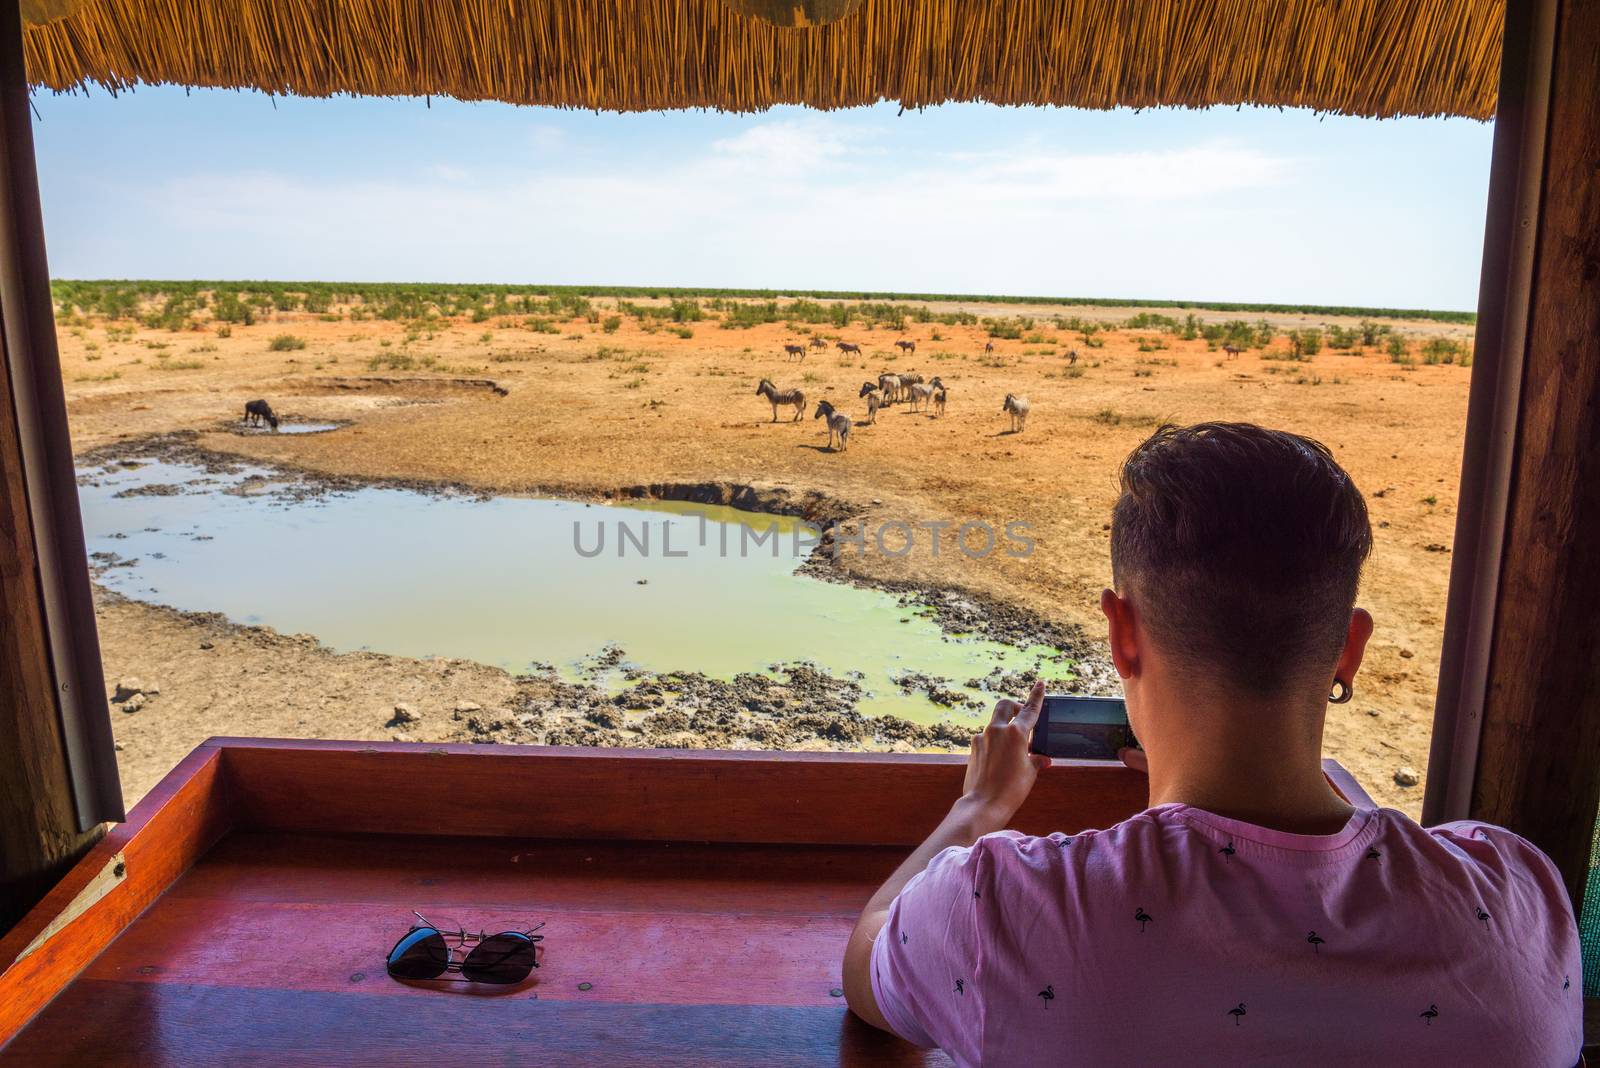 Tourist films wildlife with a smartphone in Etosha National Park, Namibia by nickfox